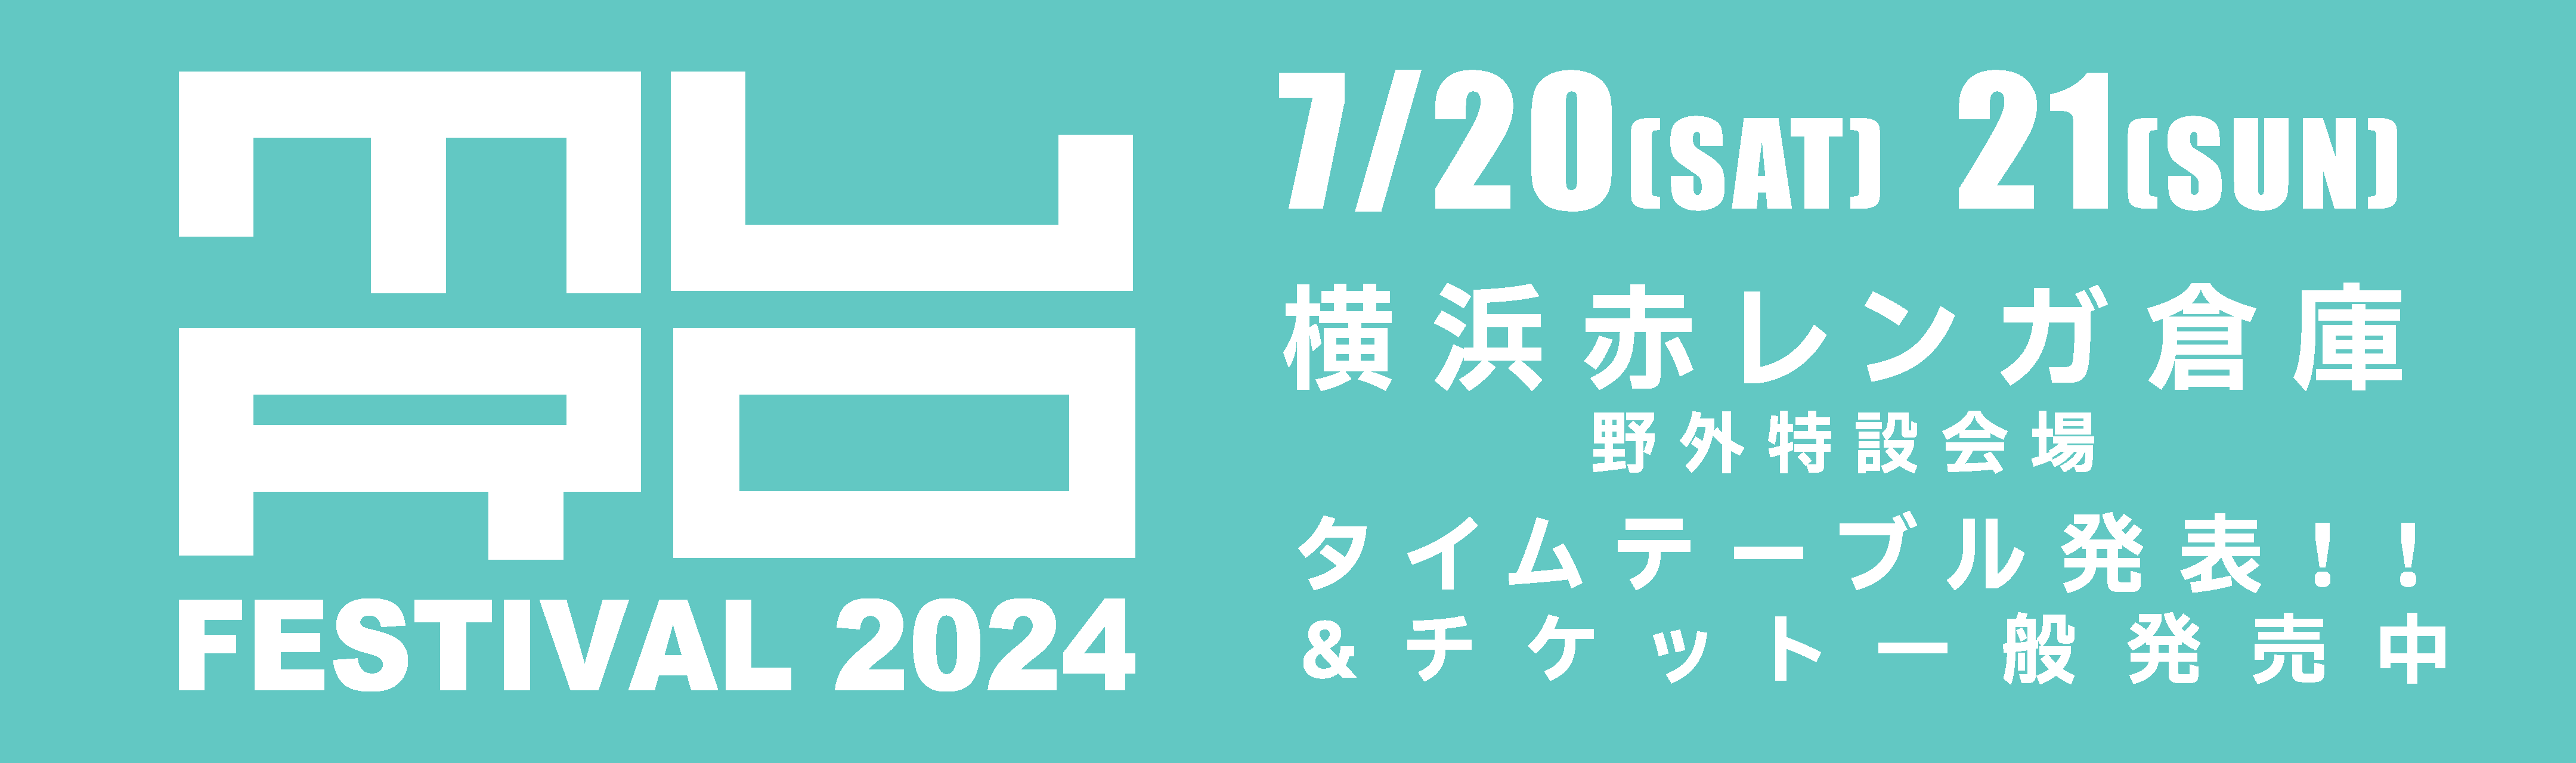 MURO FESTIVAL 2024 7/20(Sat)21(Sun) 横浜赤レンガ倉庫 野外特設会場